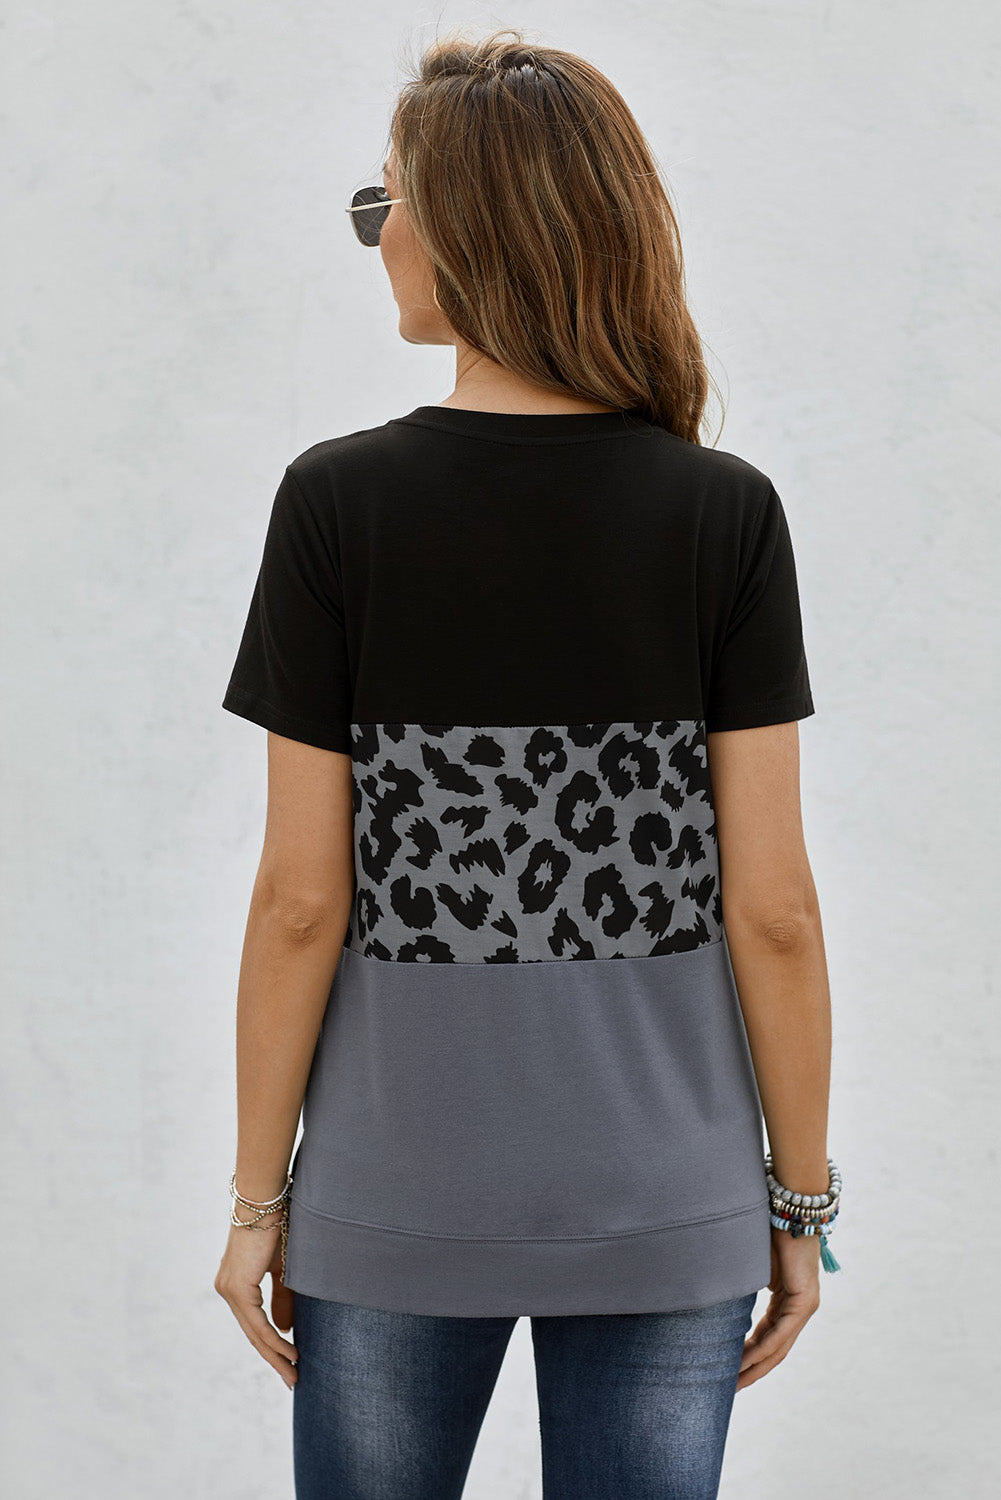 Women's Color Block Short Sleeve T-Shirt Leopard Print Crew Neck Tops Side Split Casual Blouse Sai Feel